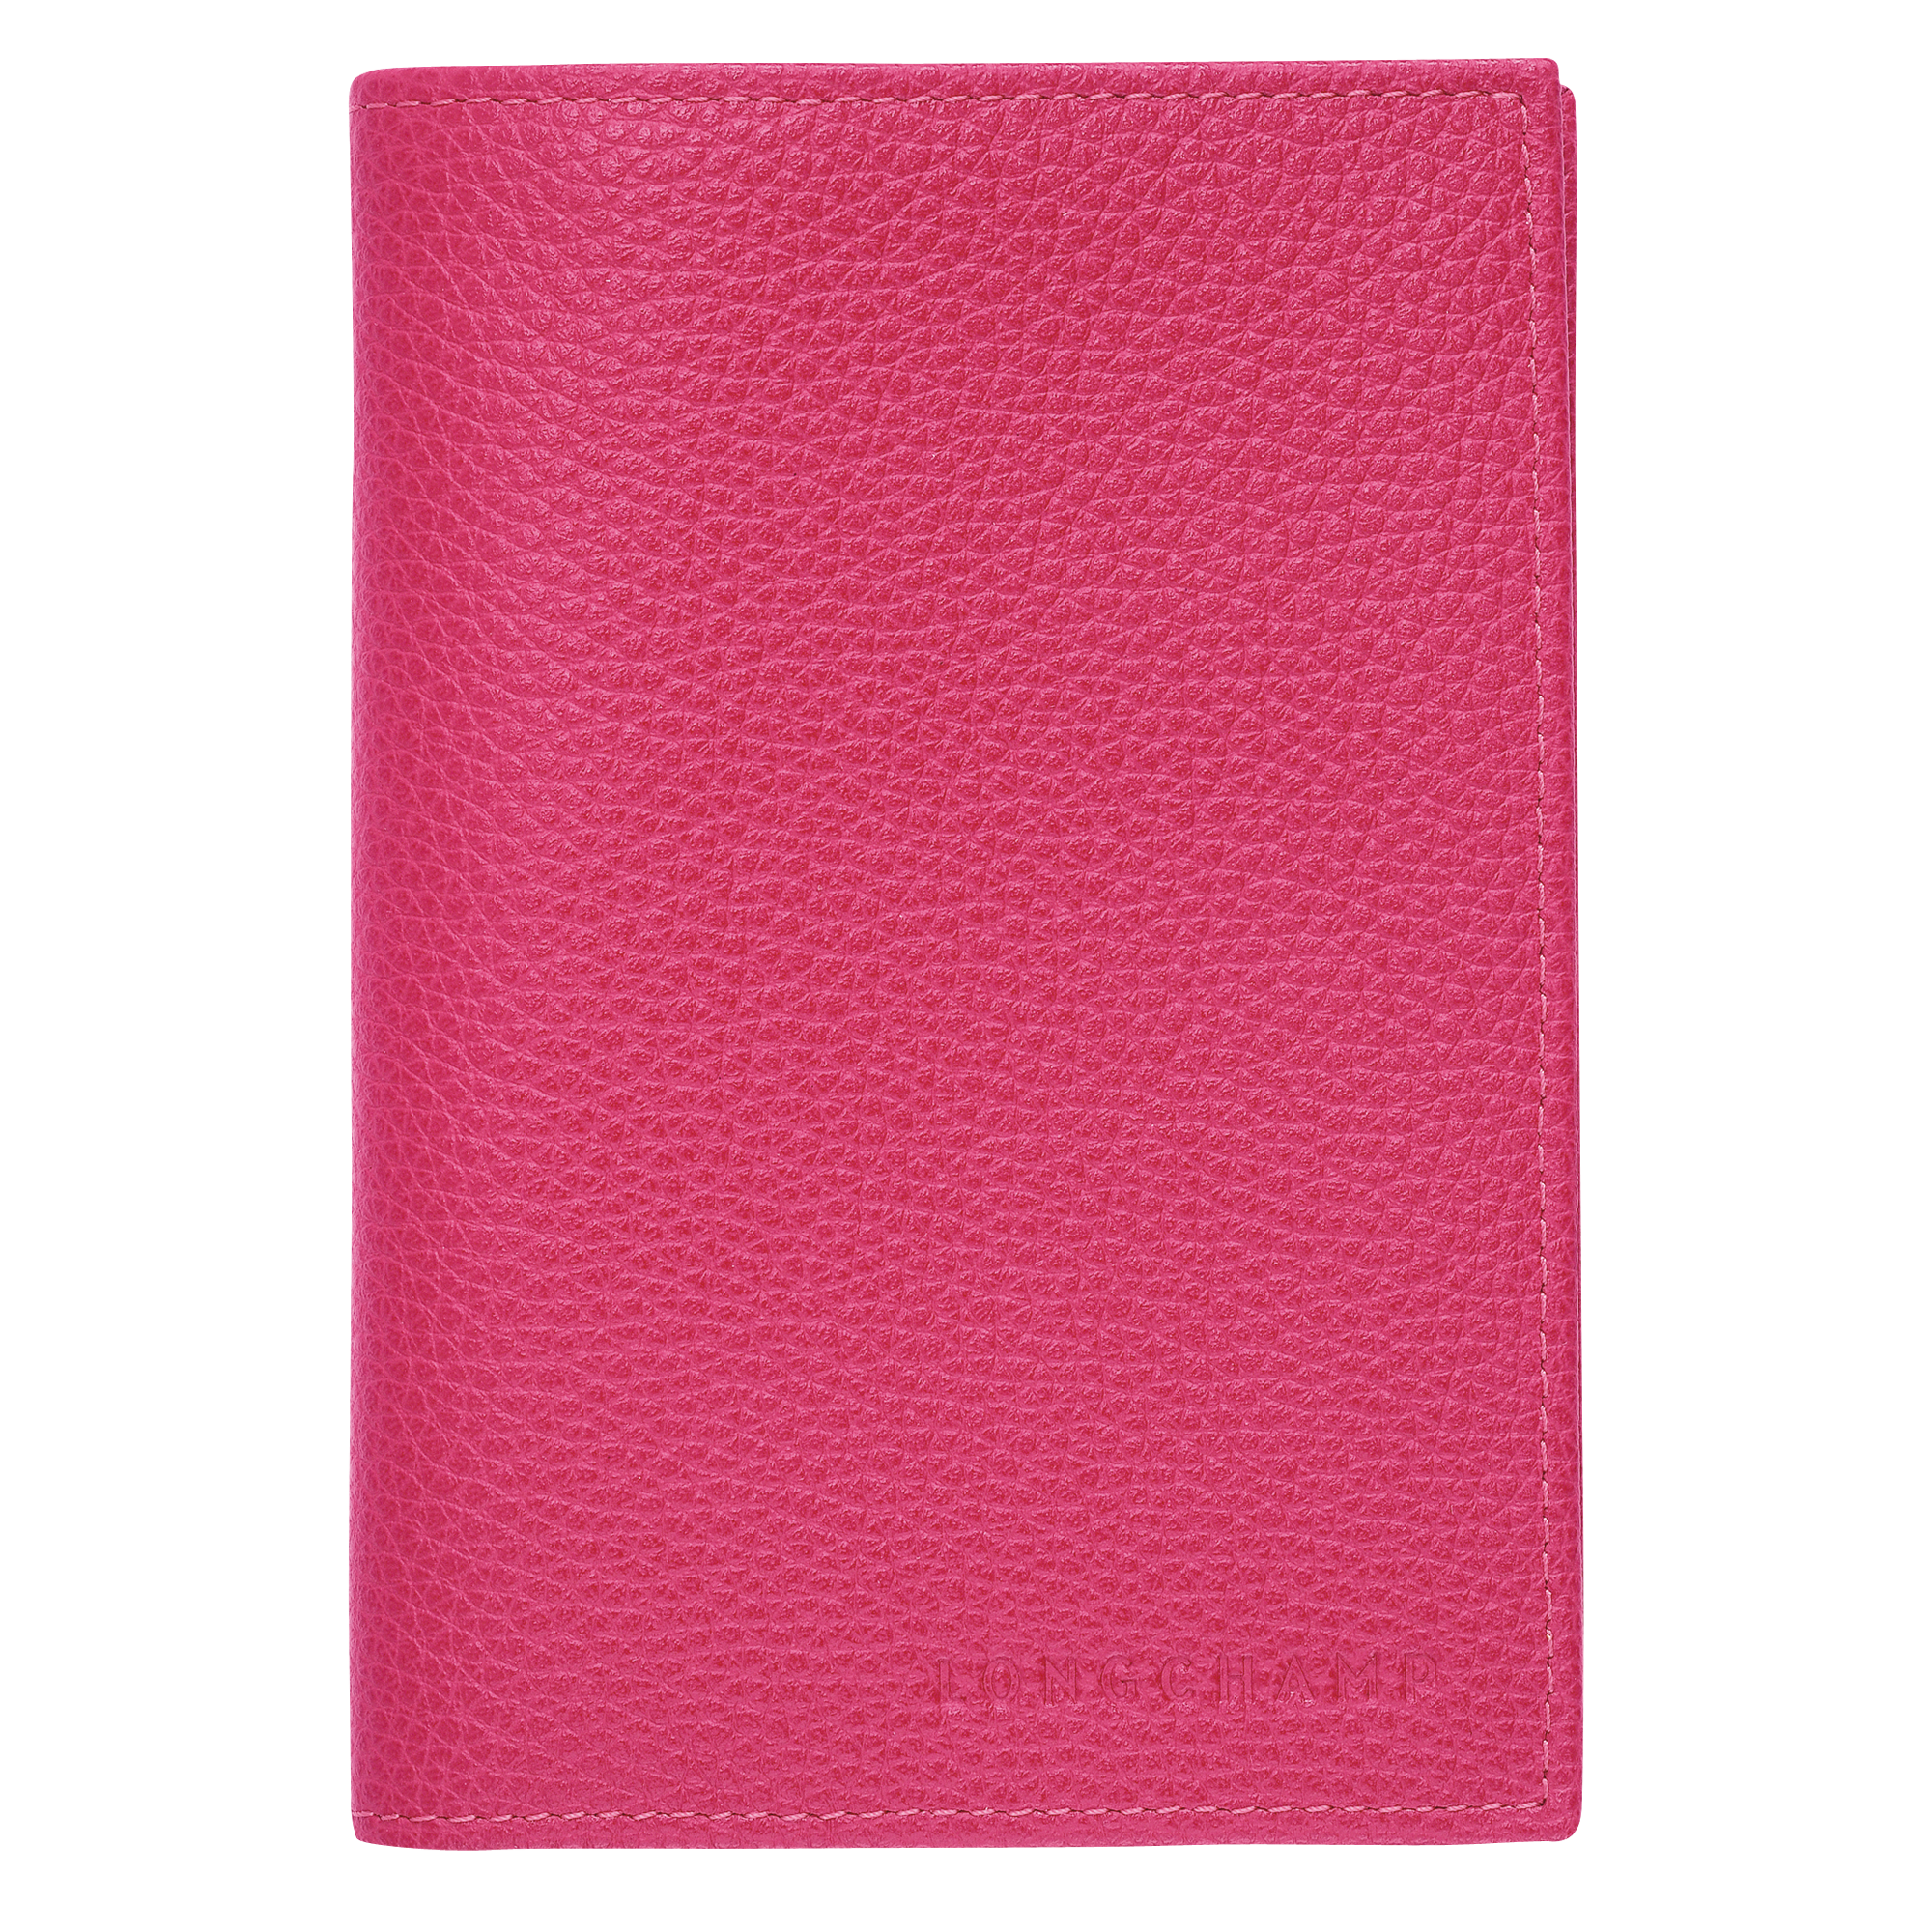 passport cover longchamp